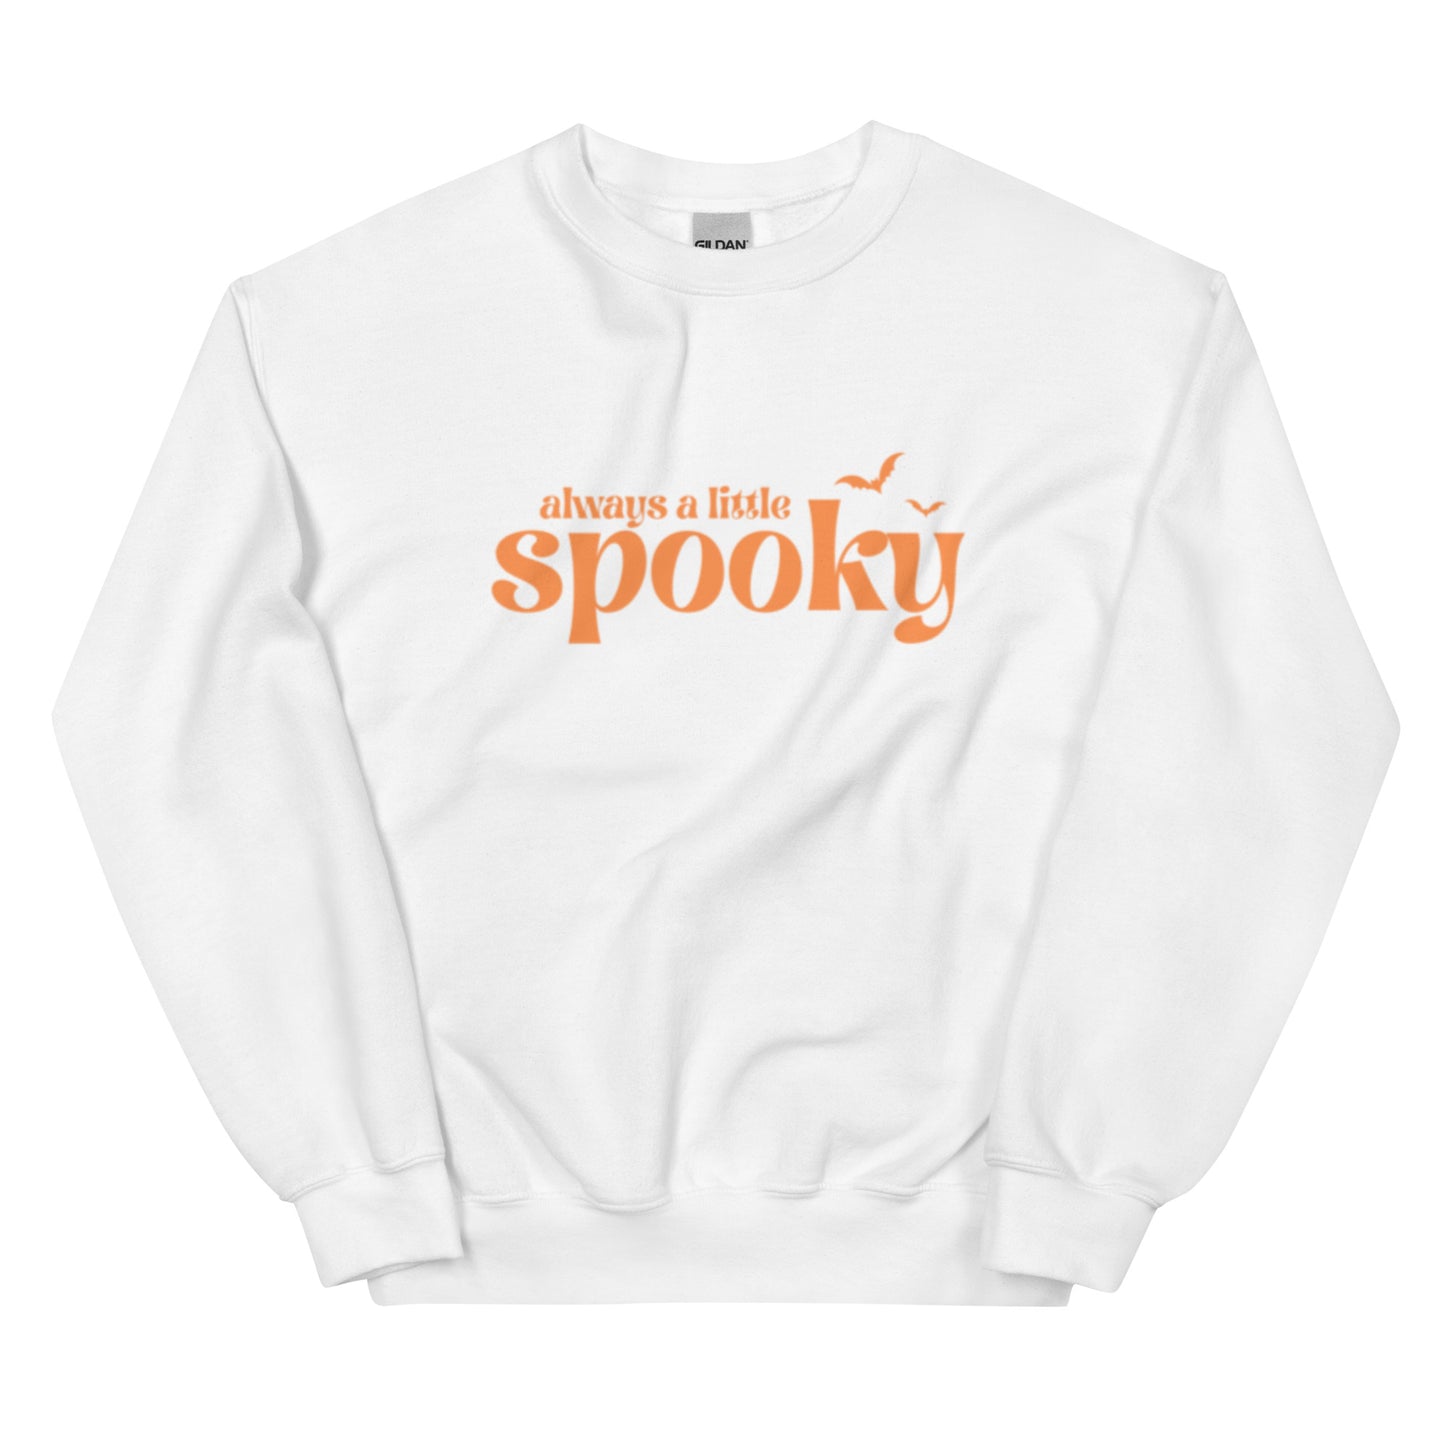 A white Halloween crewneck sweatshirt that says "always a little spooky" in a trendy orange font